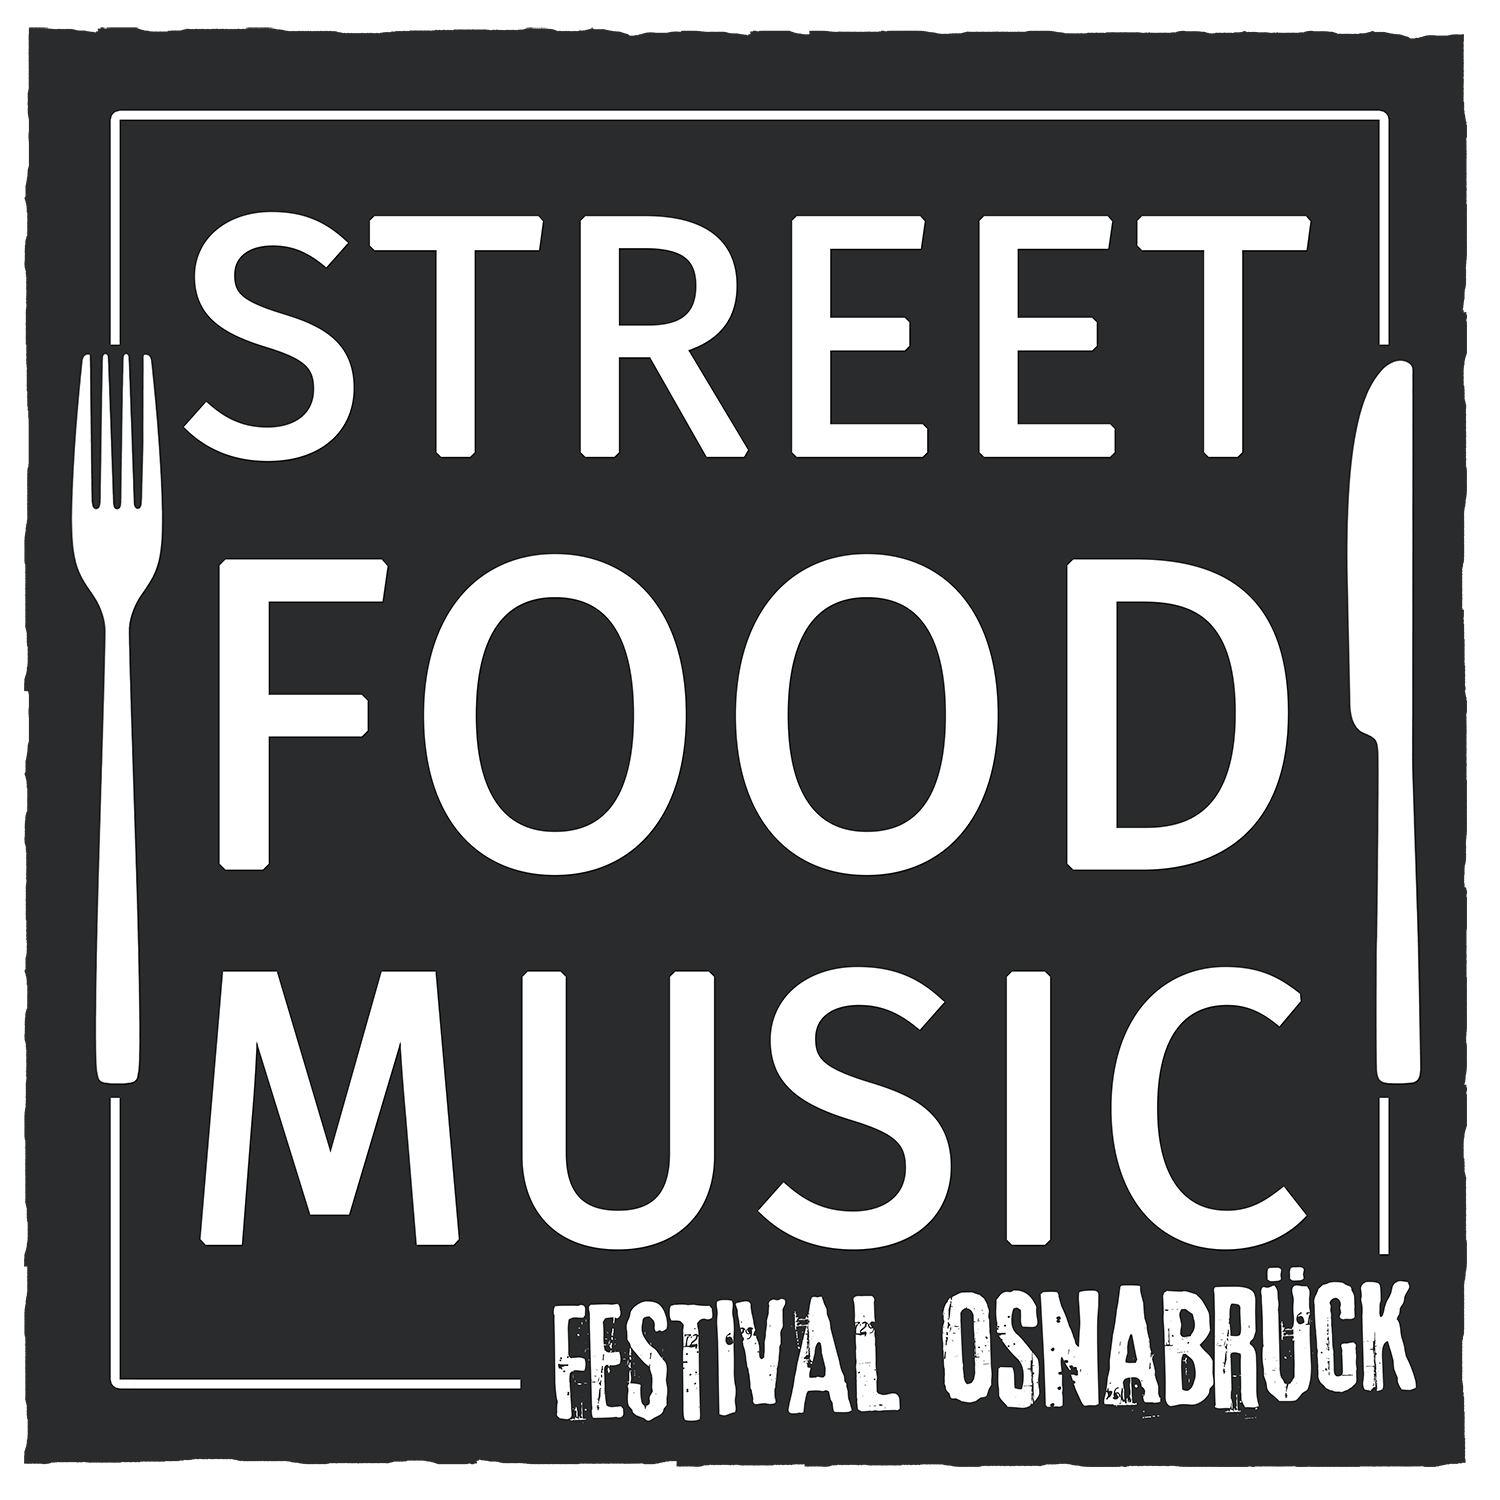 Street Food & Music Festival Osnabrück